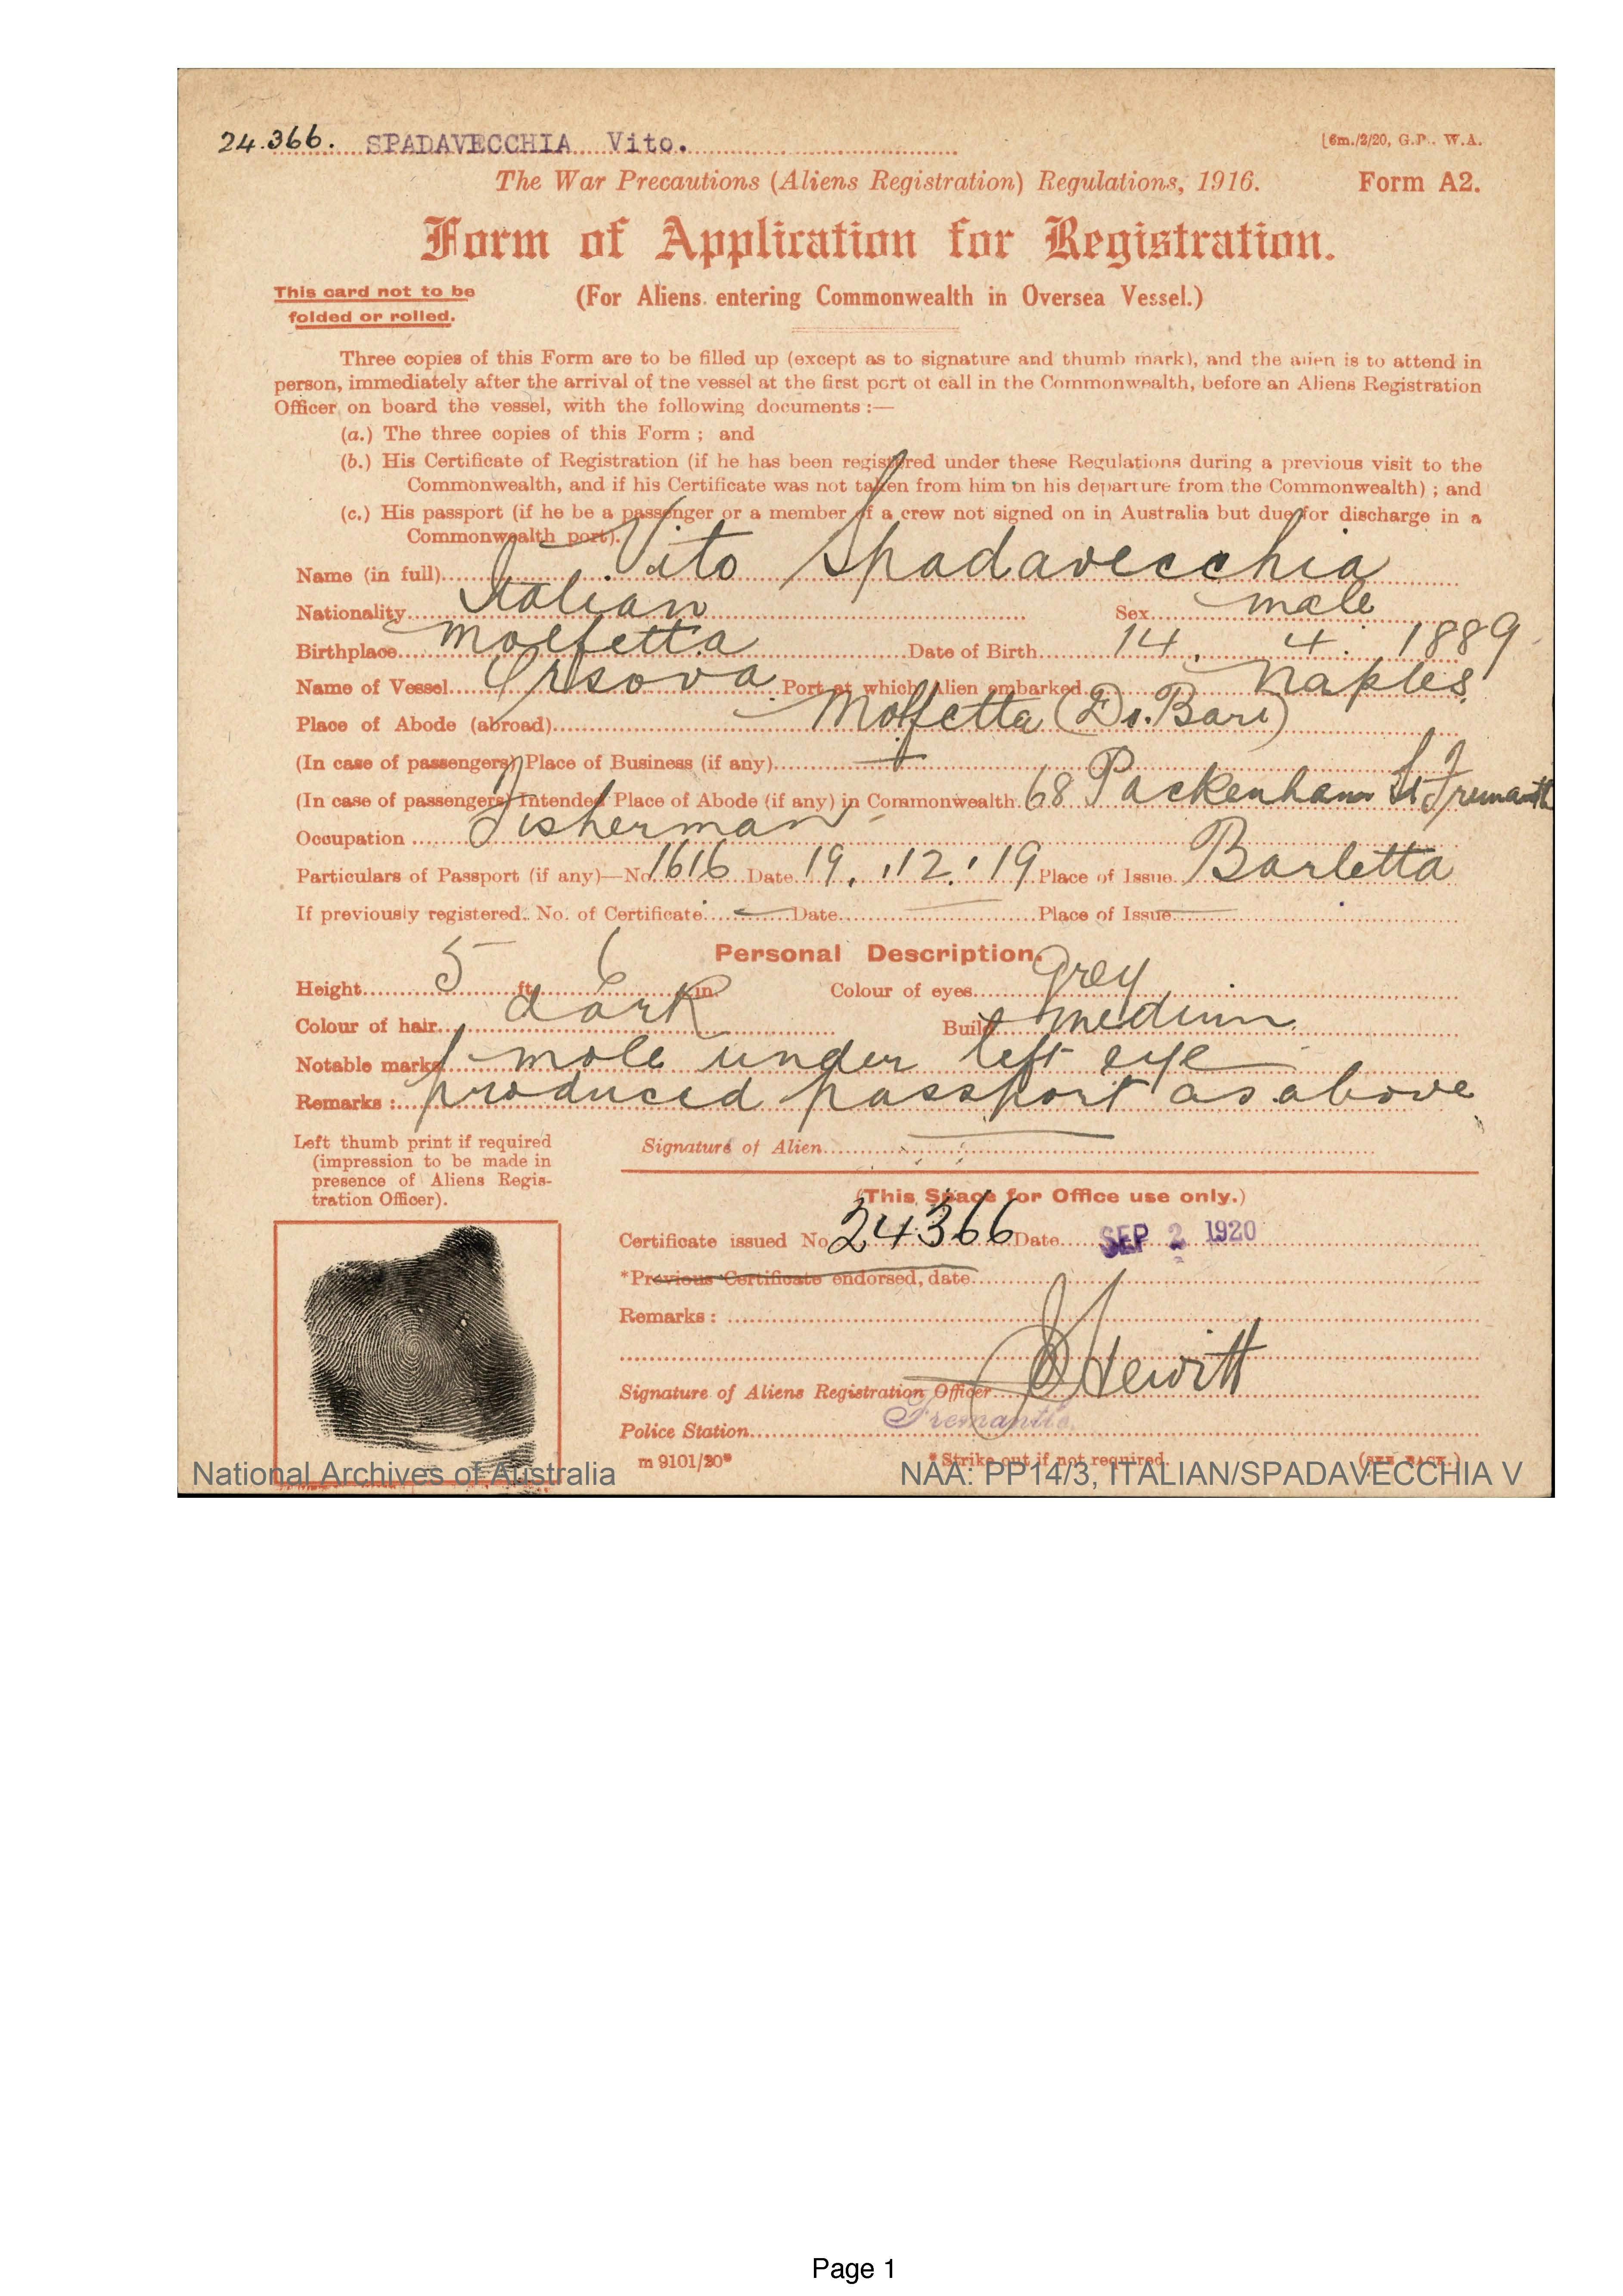 Copy of Vito Spadavecchia's Registration Papers